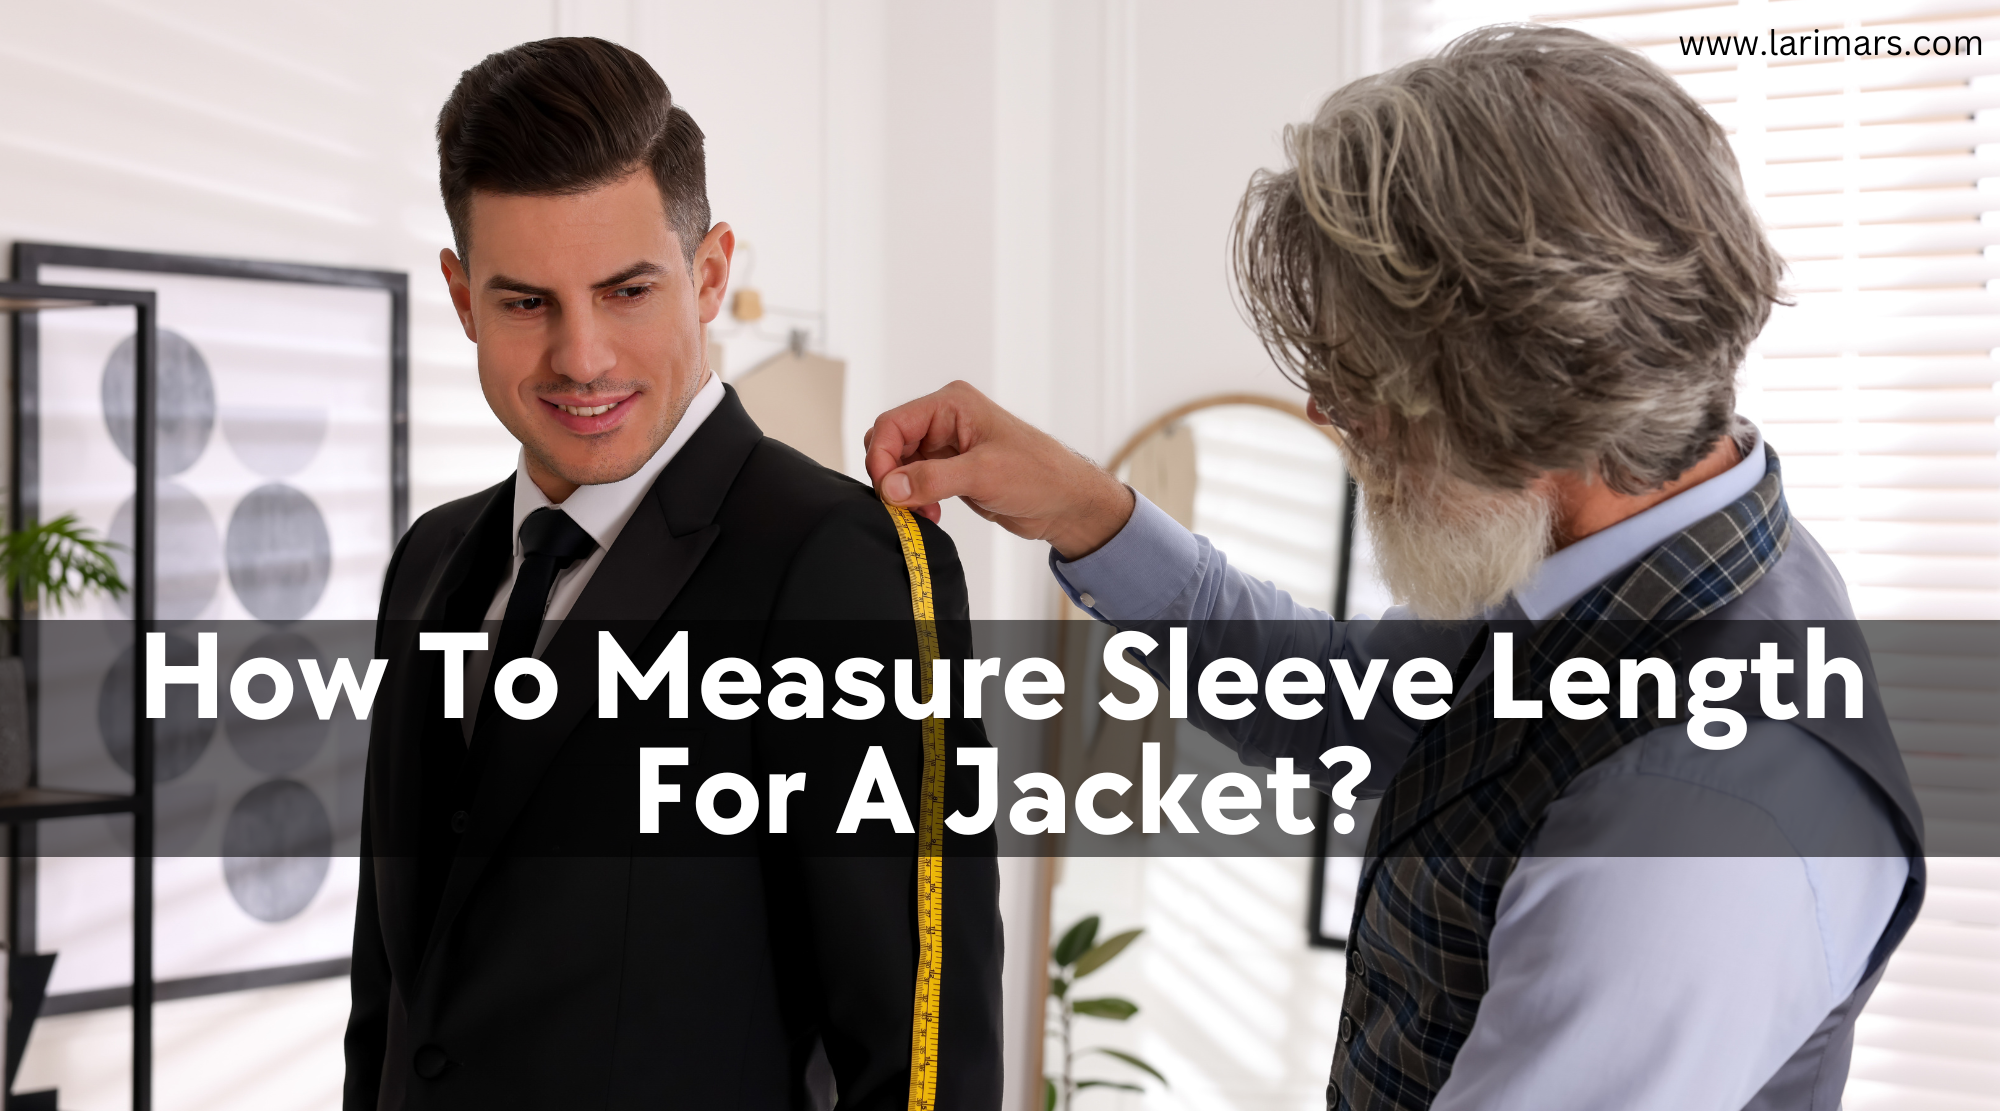 Measure Sleeve Length For A Jacket